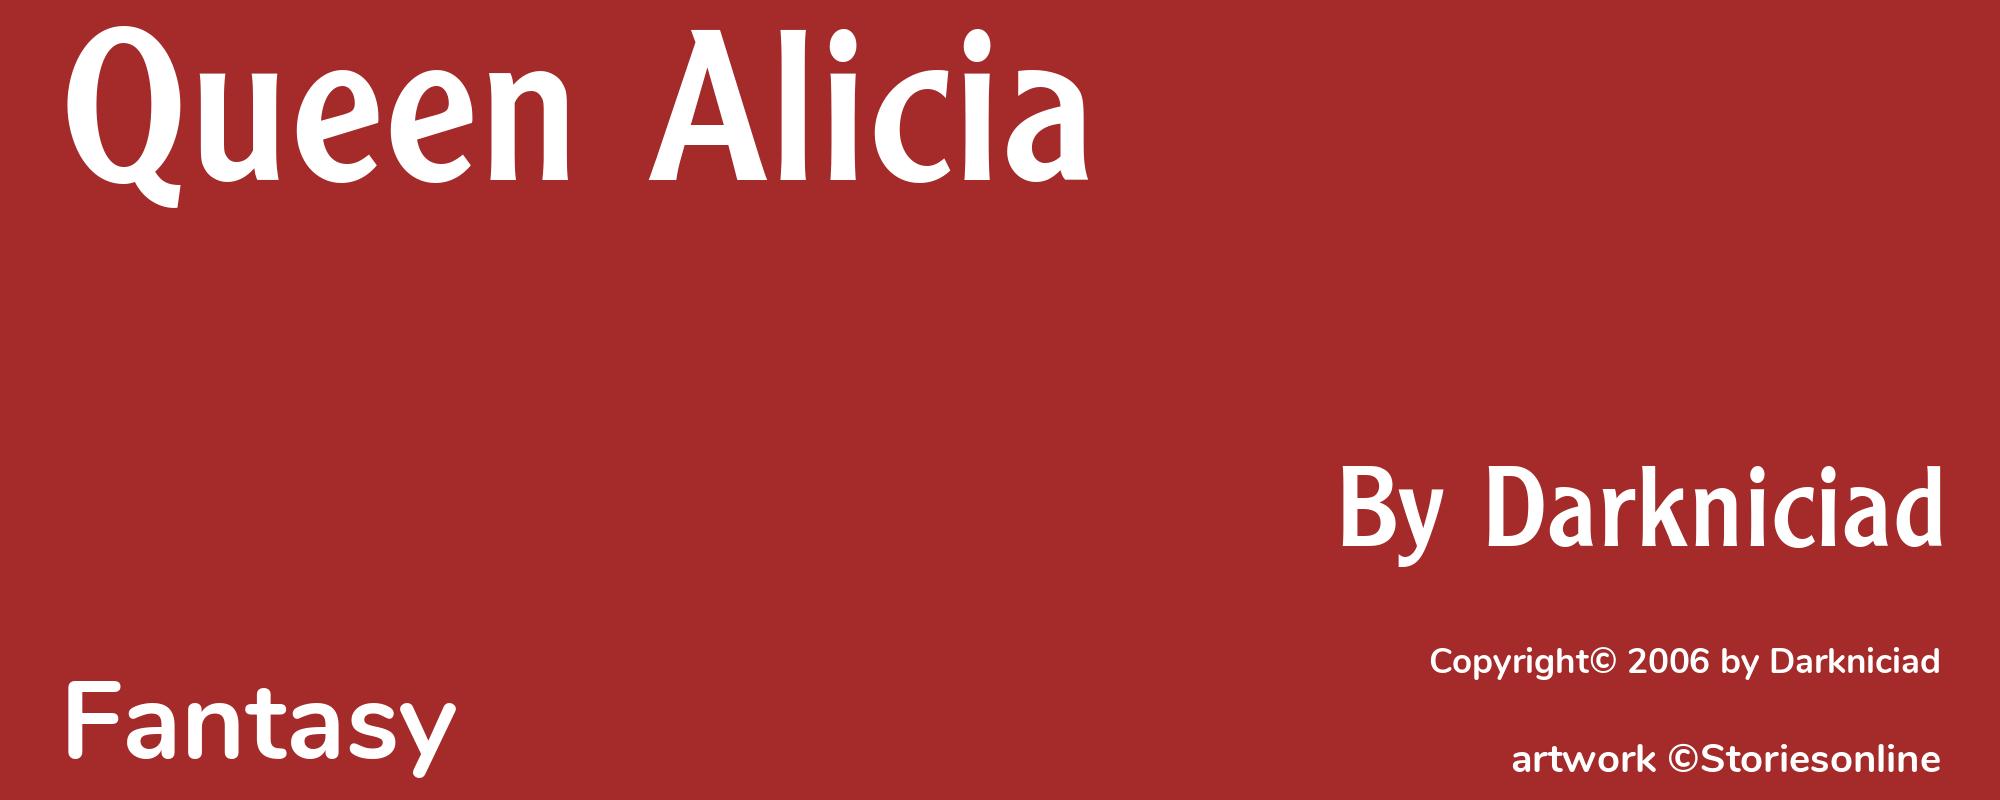 Queen Alicia - Cover